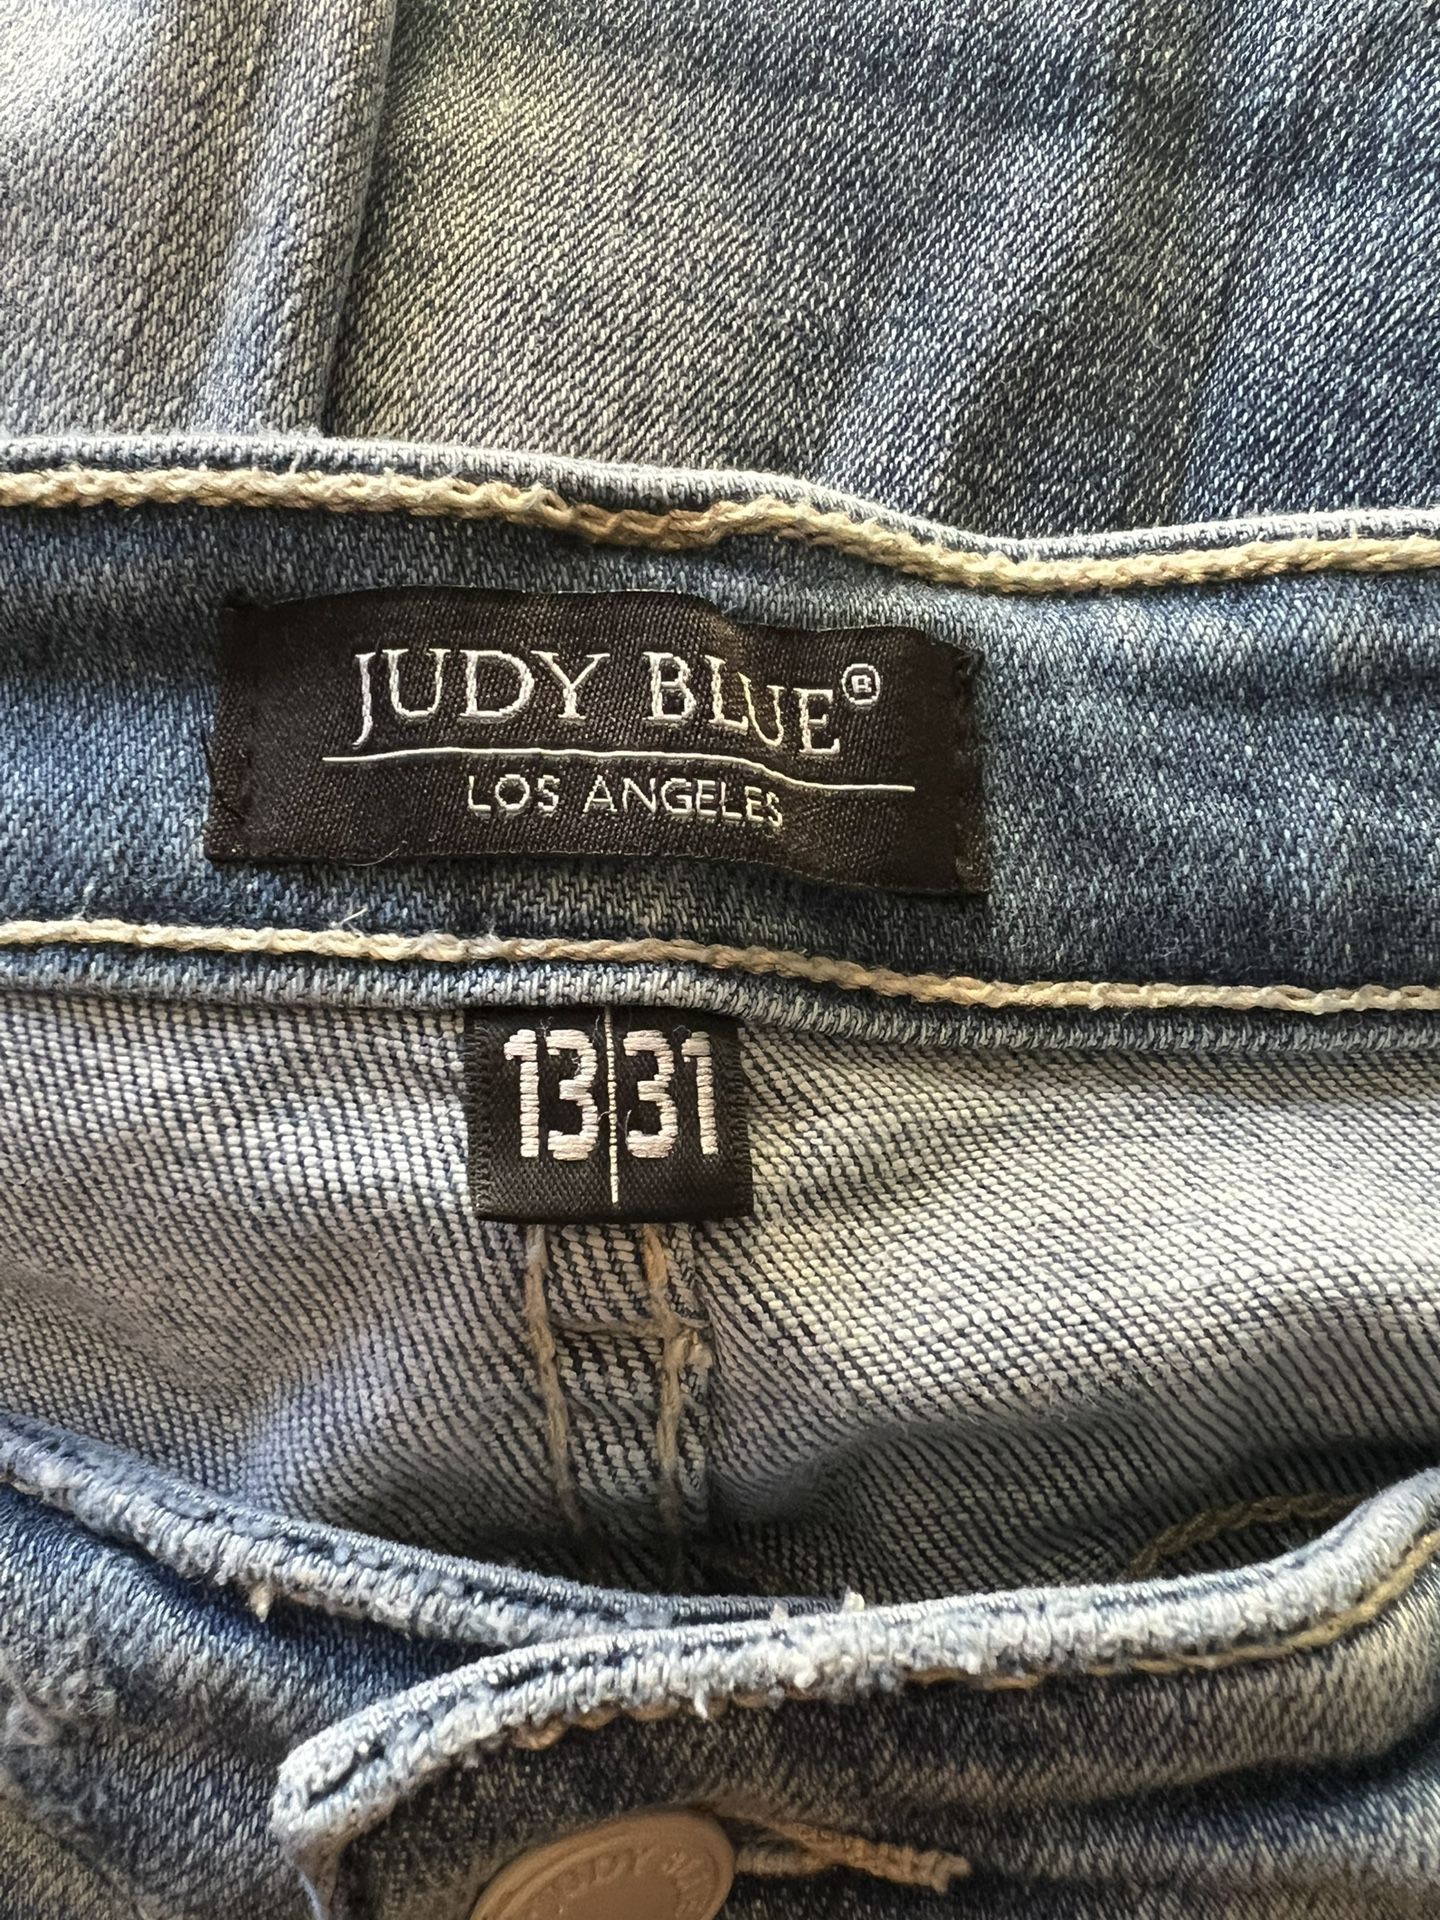 Judy Blues